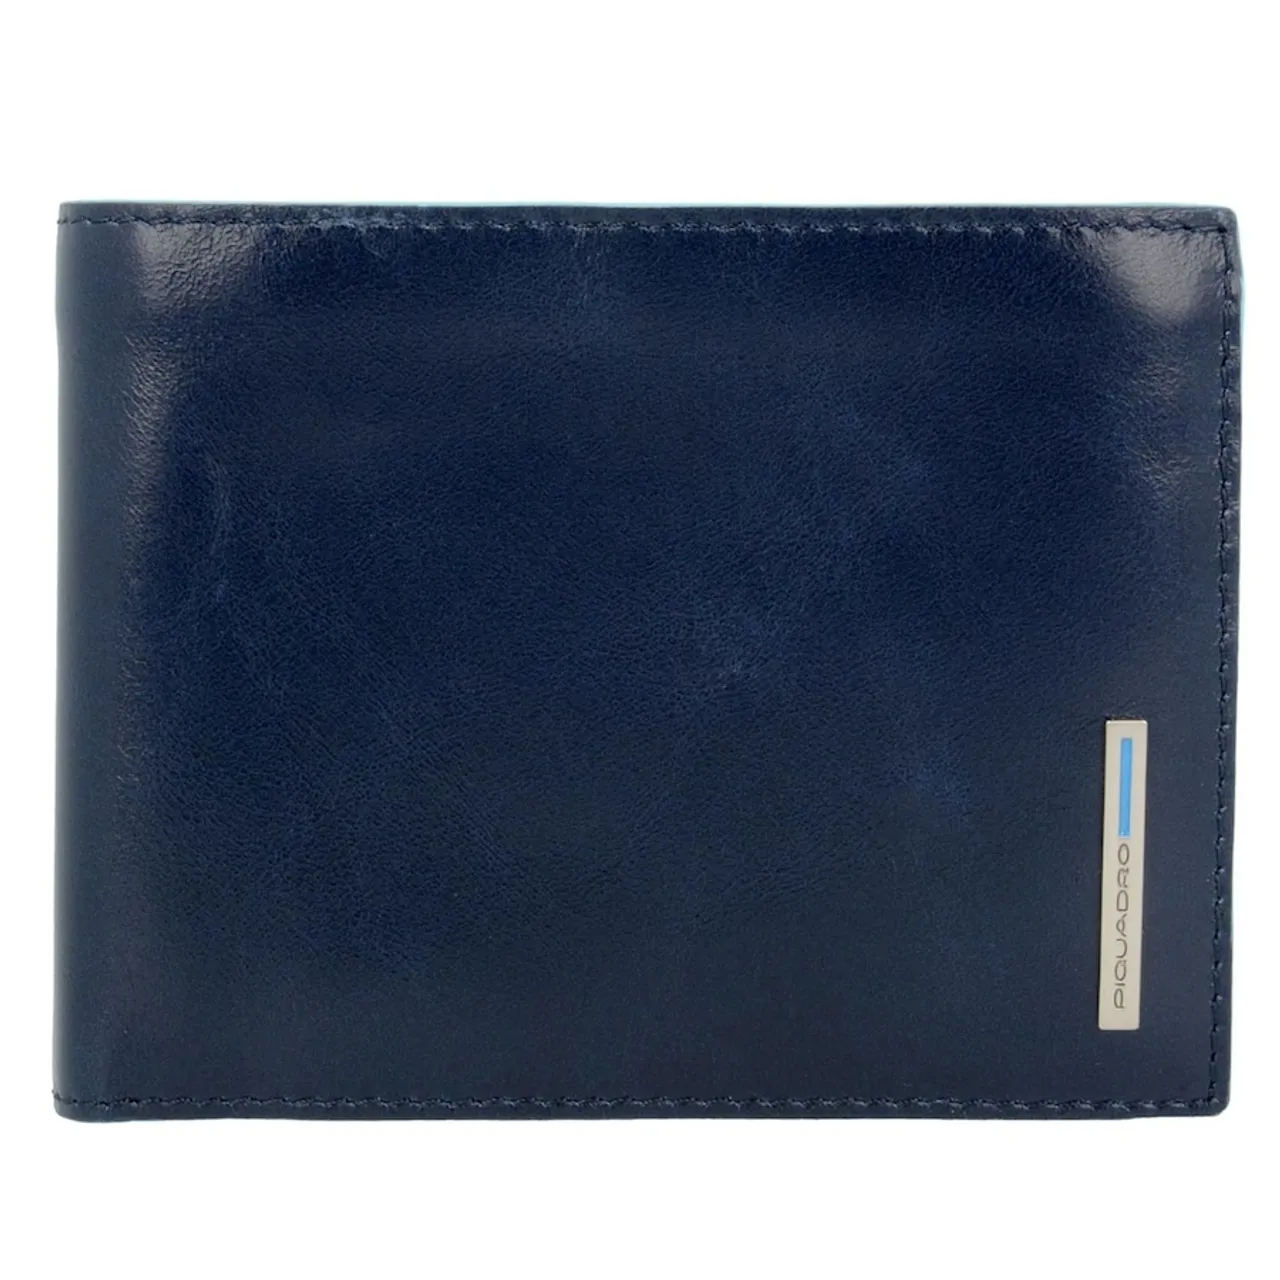 Piquadro - Blue Square Geldbörse Leder 12,5 cm Portemonnaies Herren